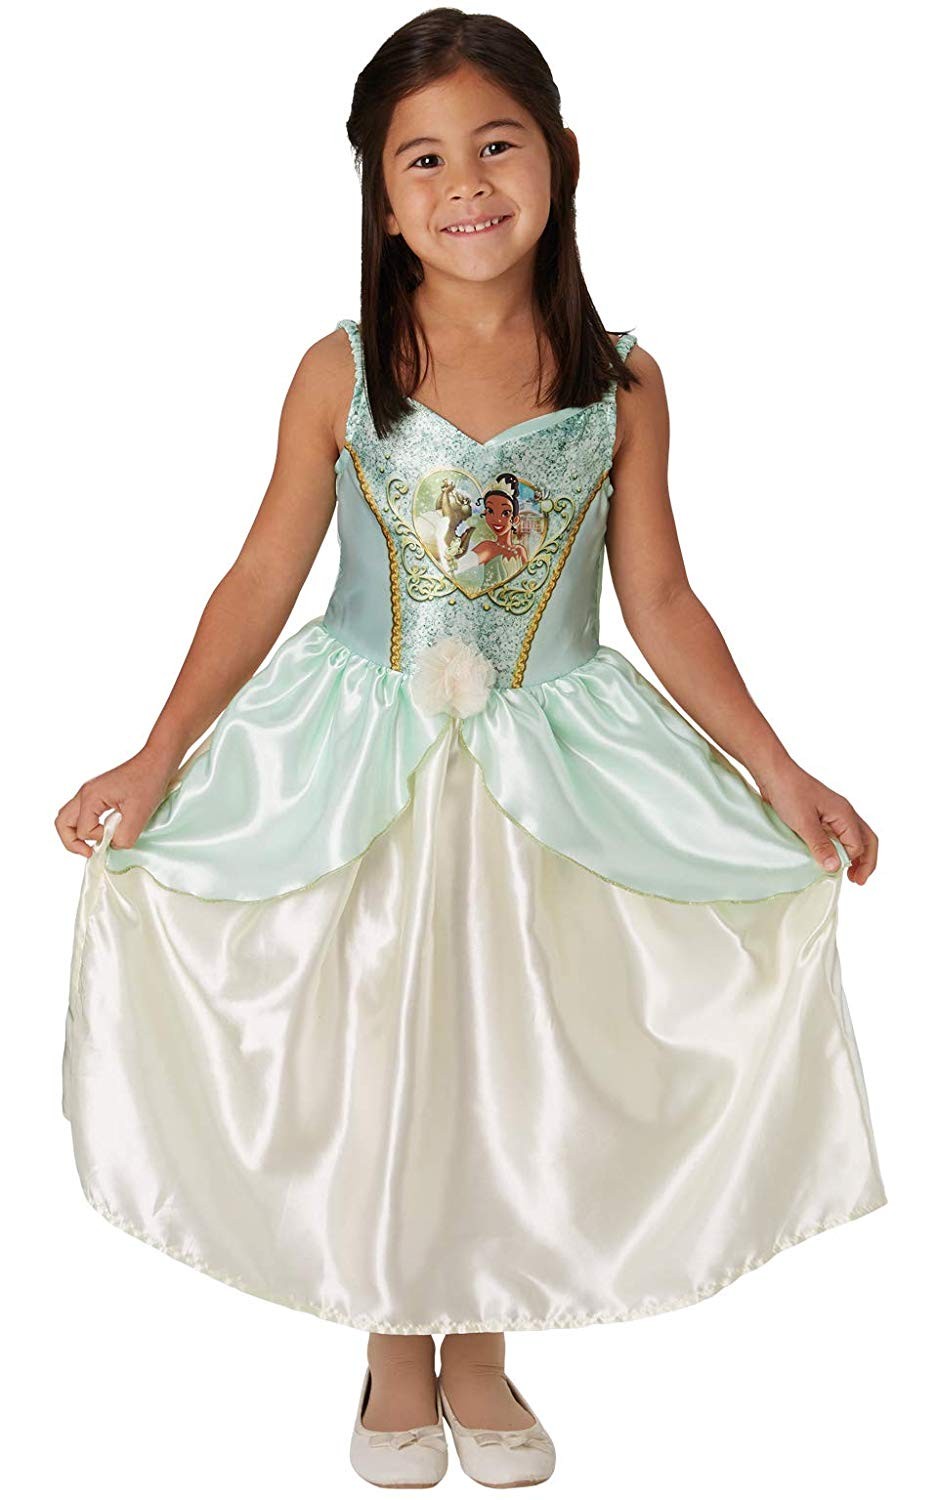 editorial granja Escupir Rubies 640825M Disfraz Princesa Disney Tiana, tamaño pequeño, 5 - 6 años